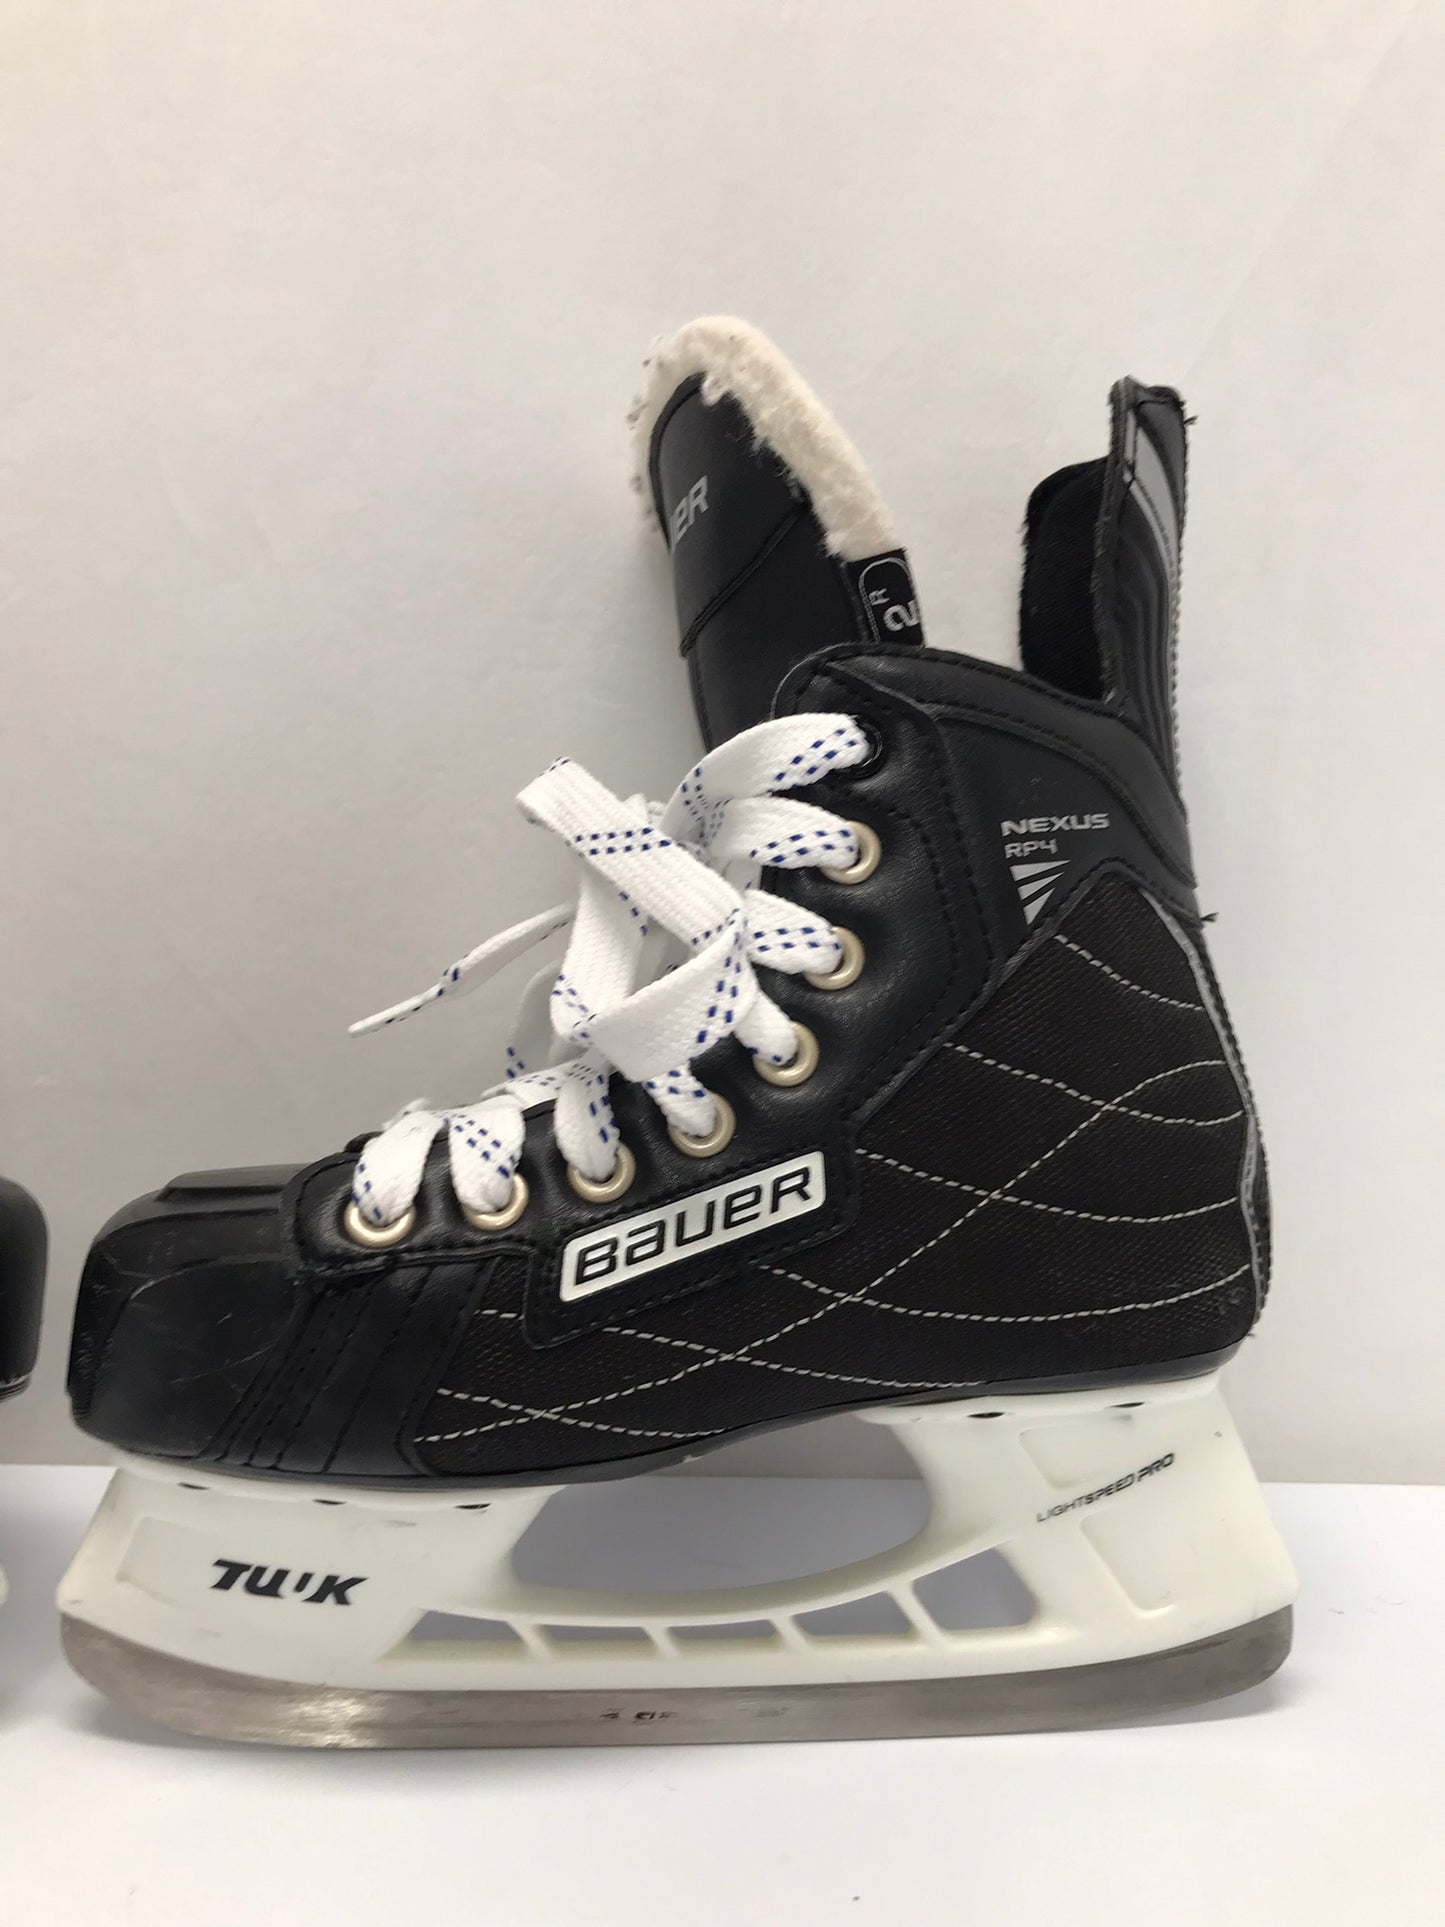 Hockey Skates Child Size 3 Shoe Size Bauer Nexus As New